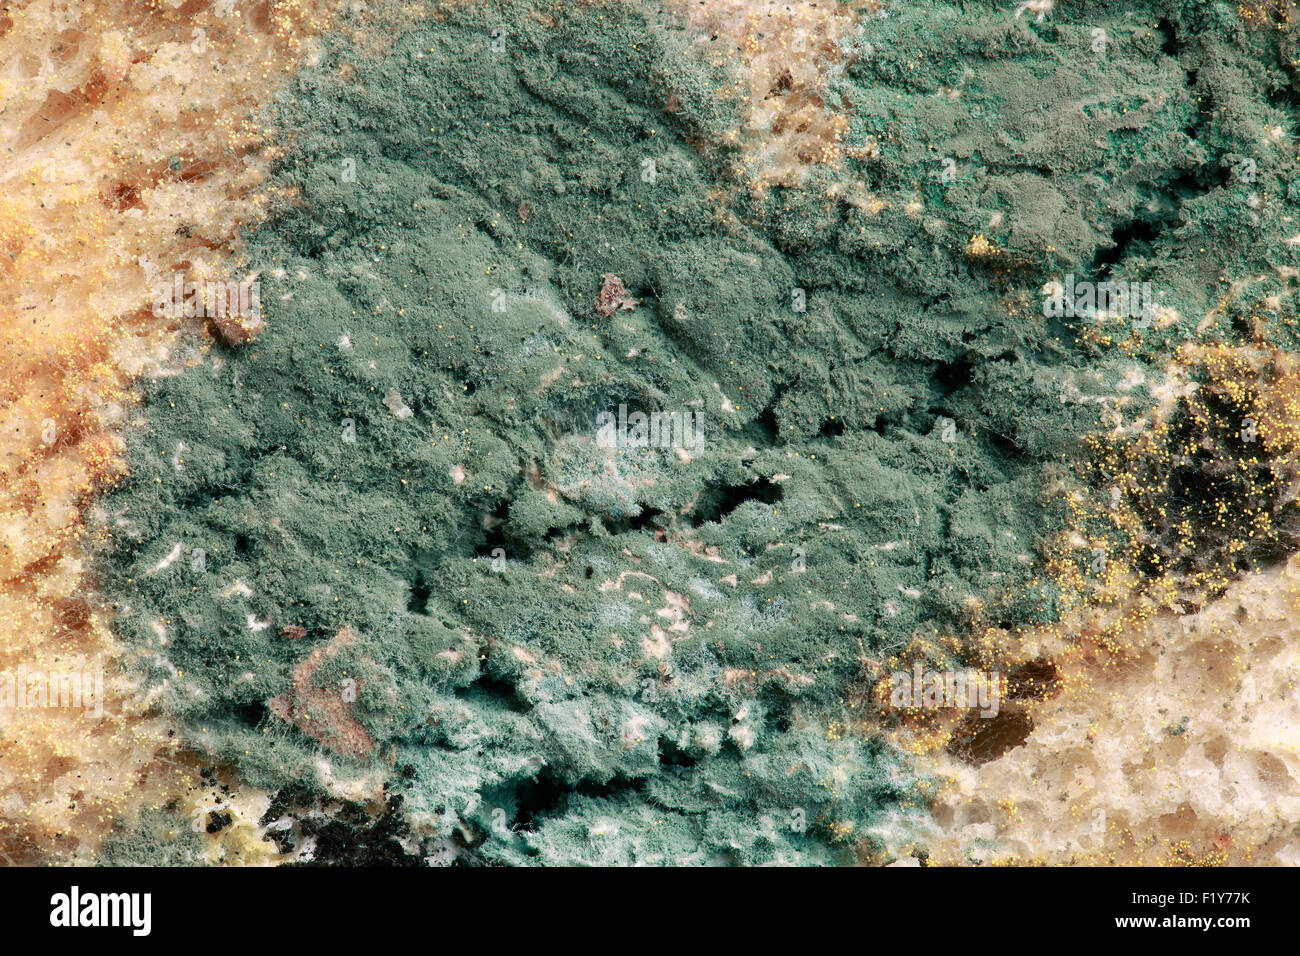 Green Bread Mold Microscopic Magnification Stock Photo